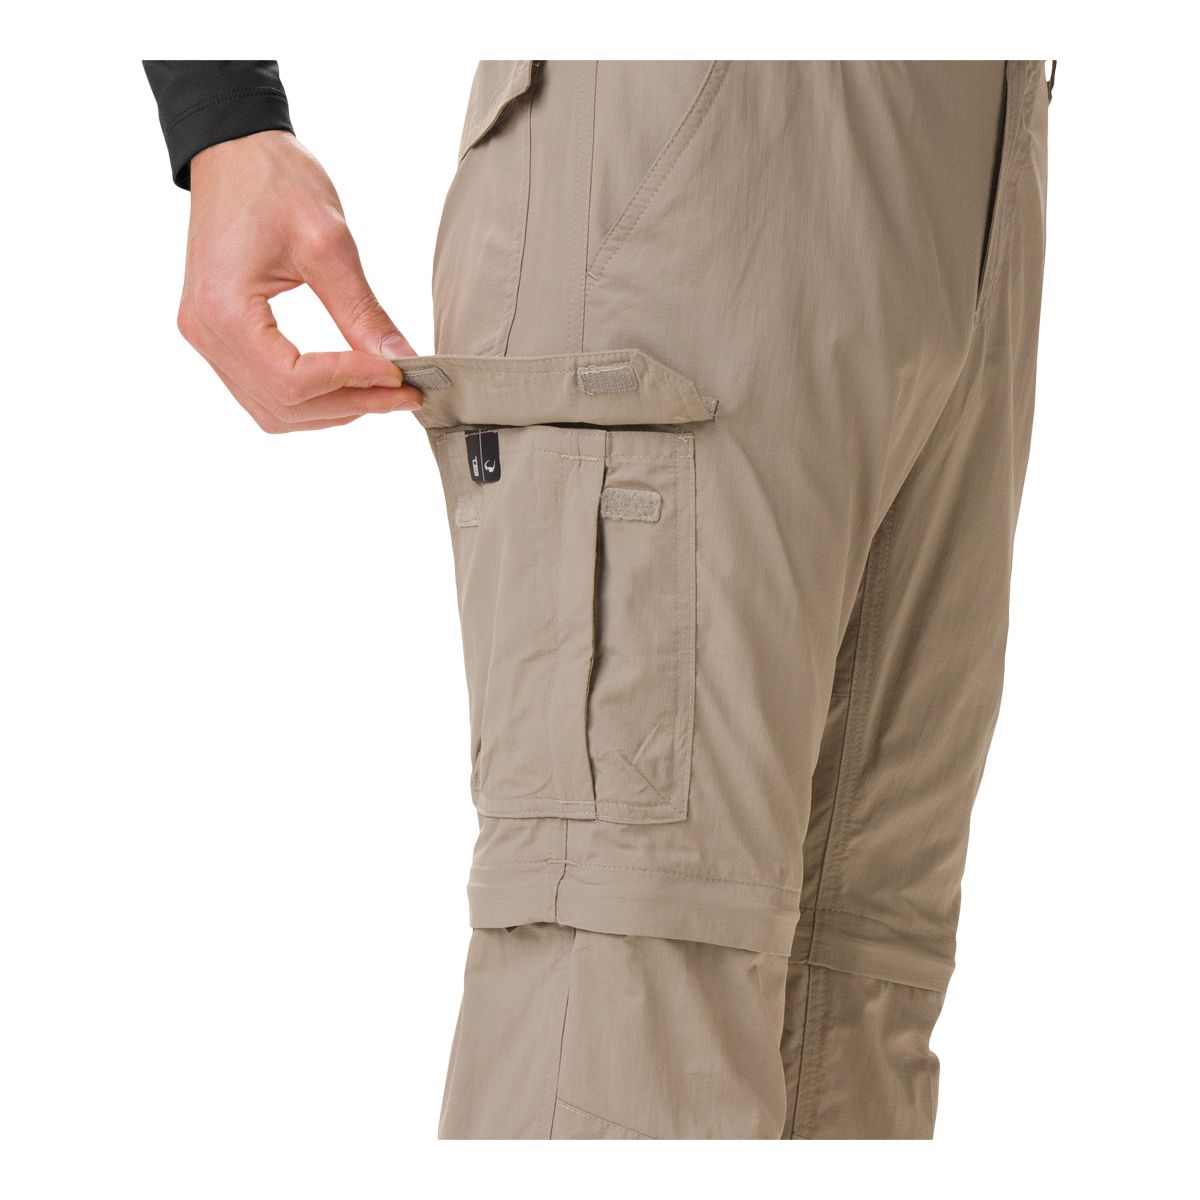 Columbia Sportswear PFG Backcountry Convertible Pants For Men 